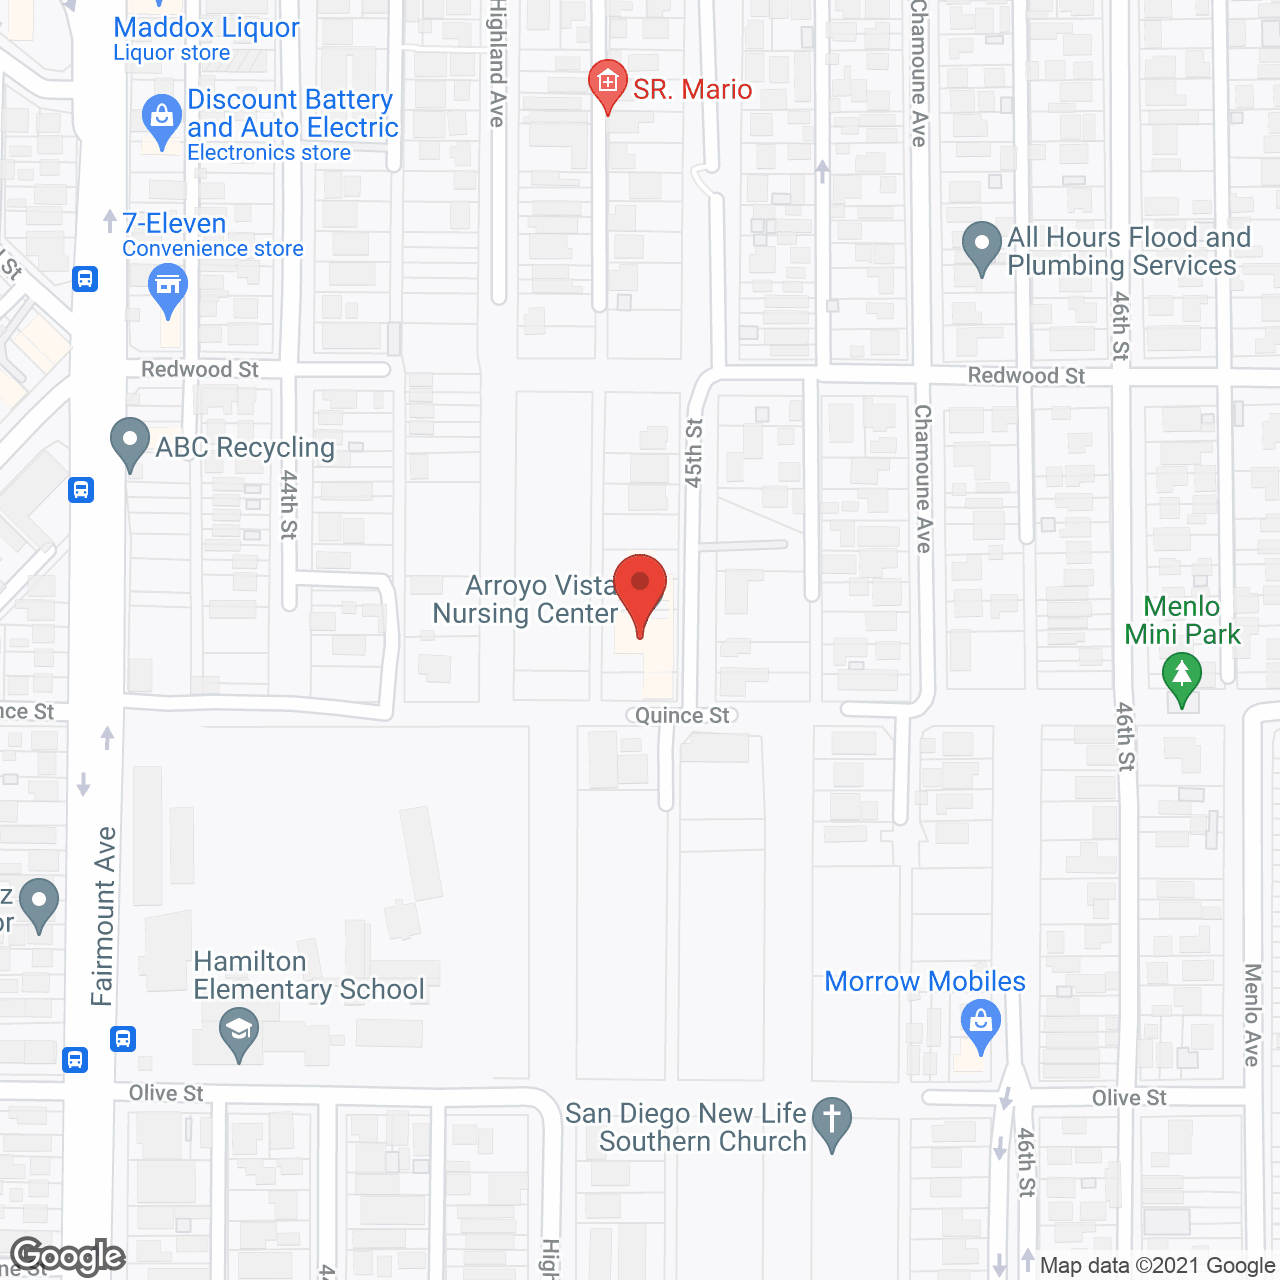 Arroyo Vista Nursing Center in google map